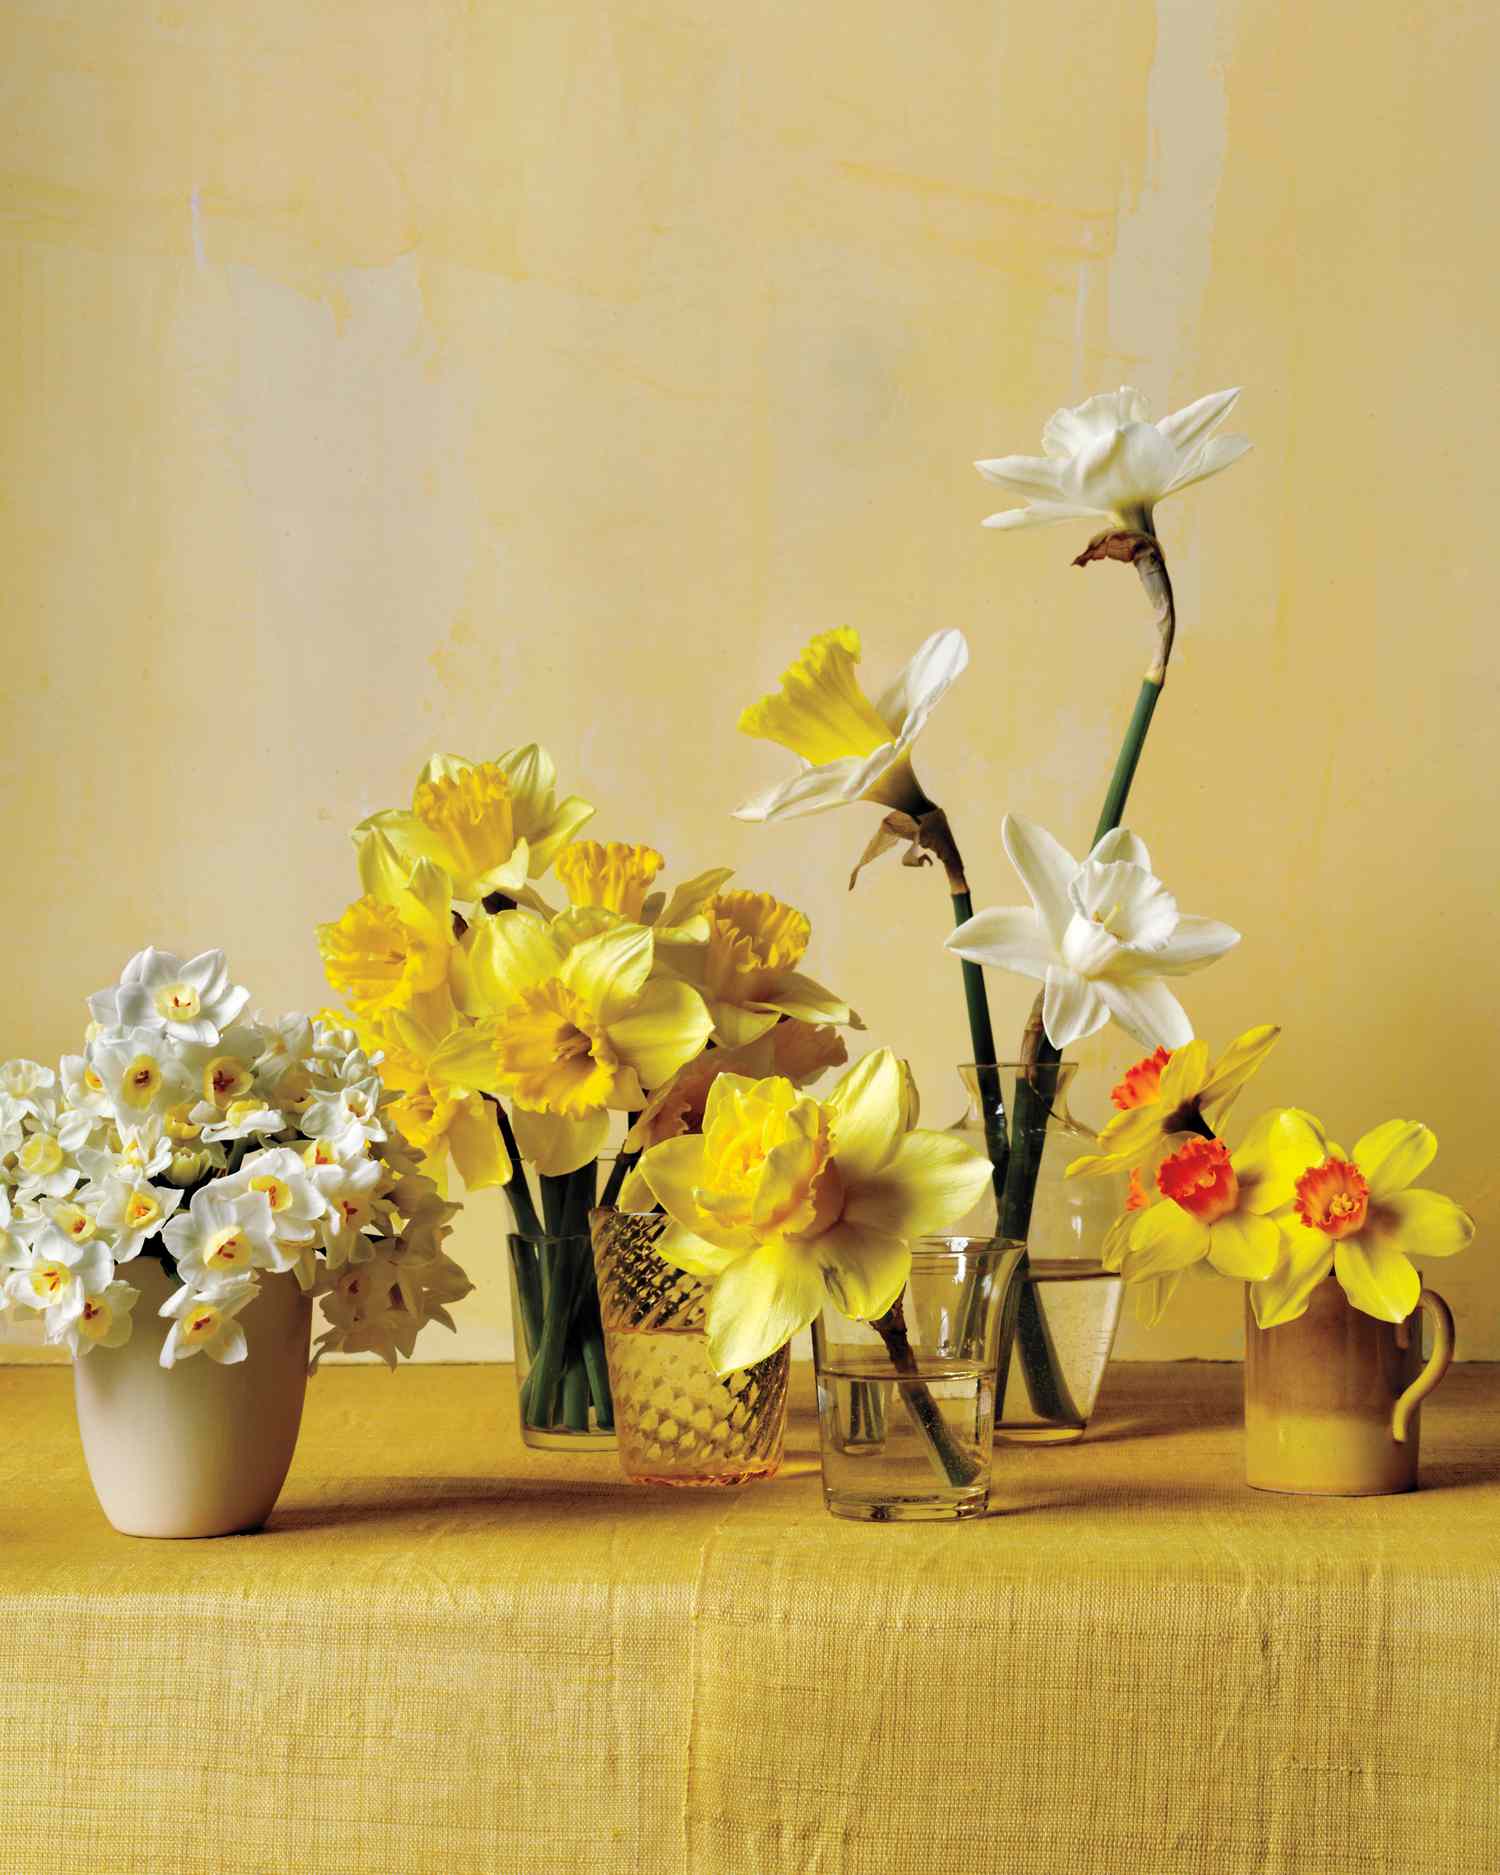 daffodil-flower-arrangement-v3-n-comp-d111001.jpg